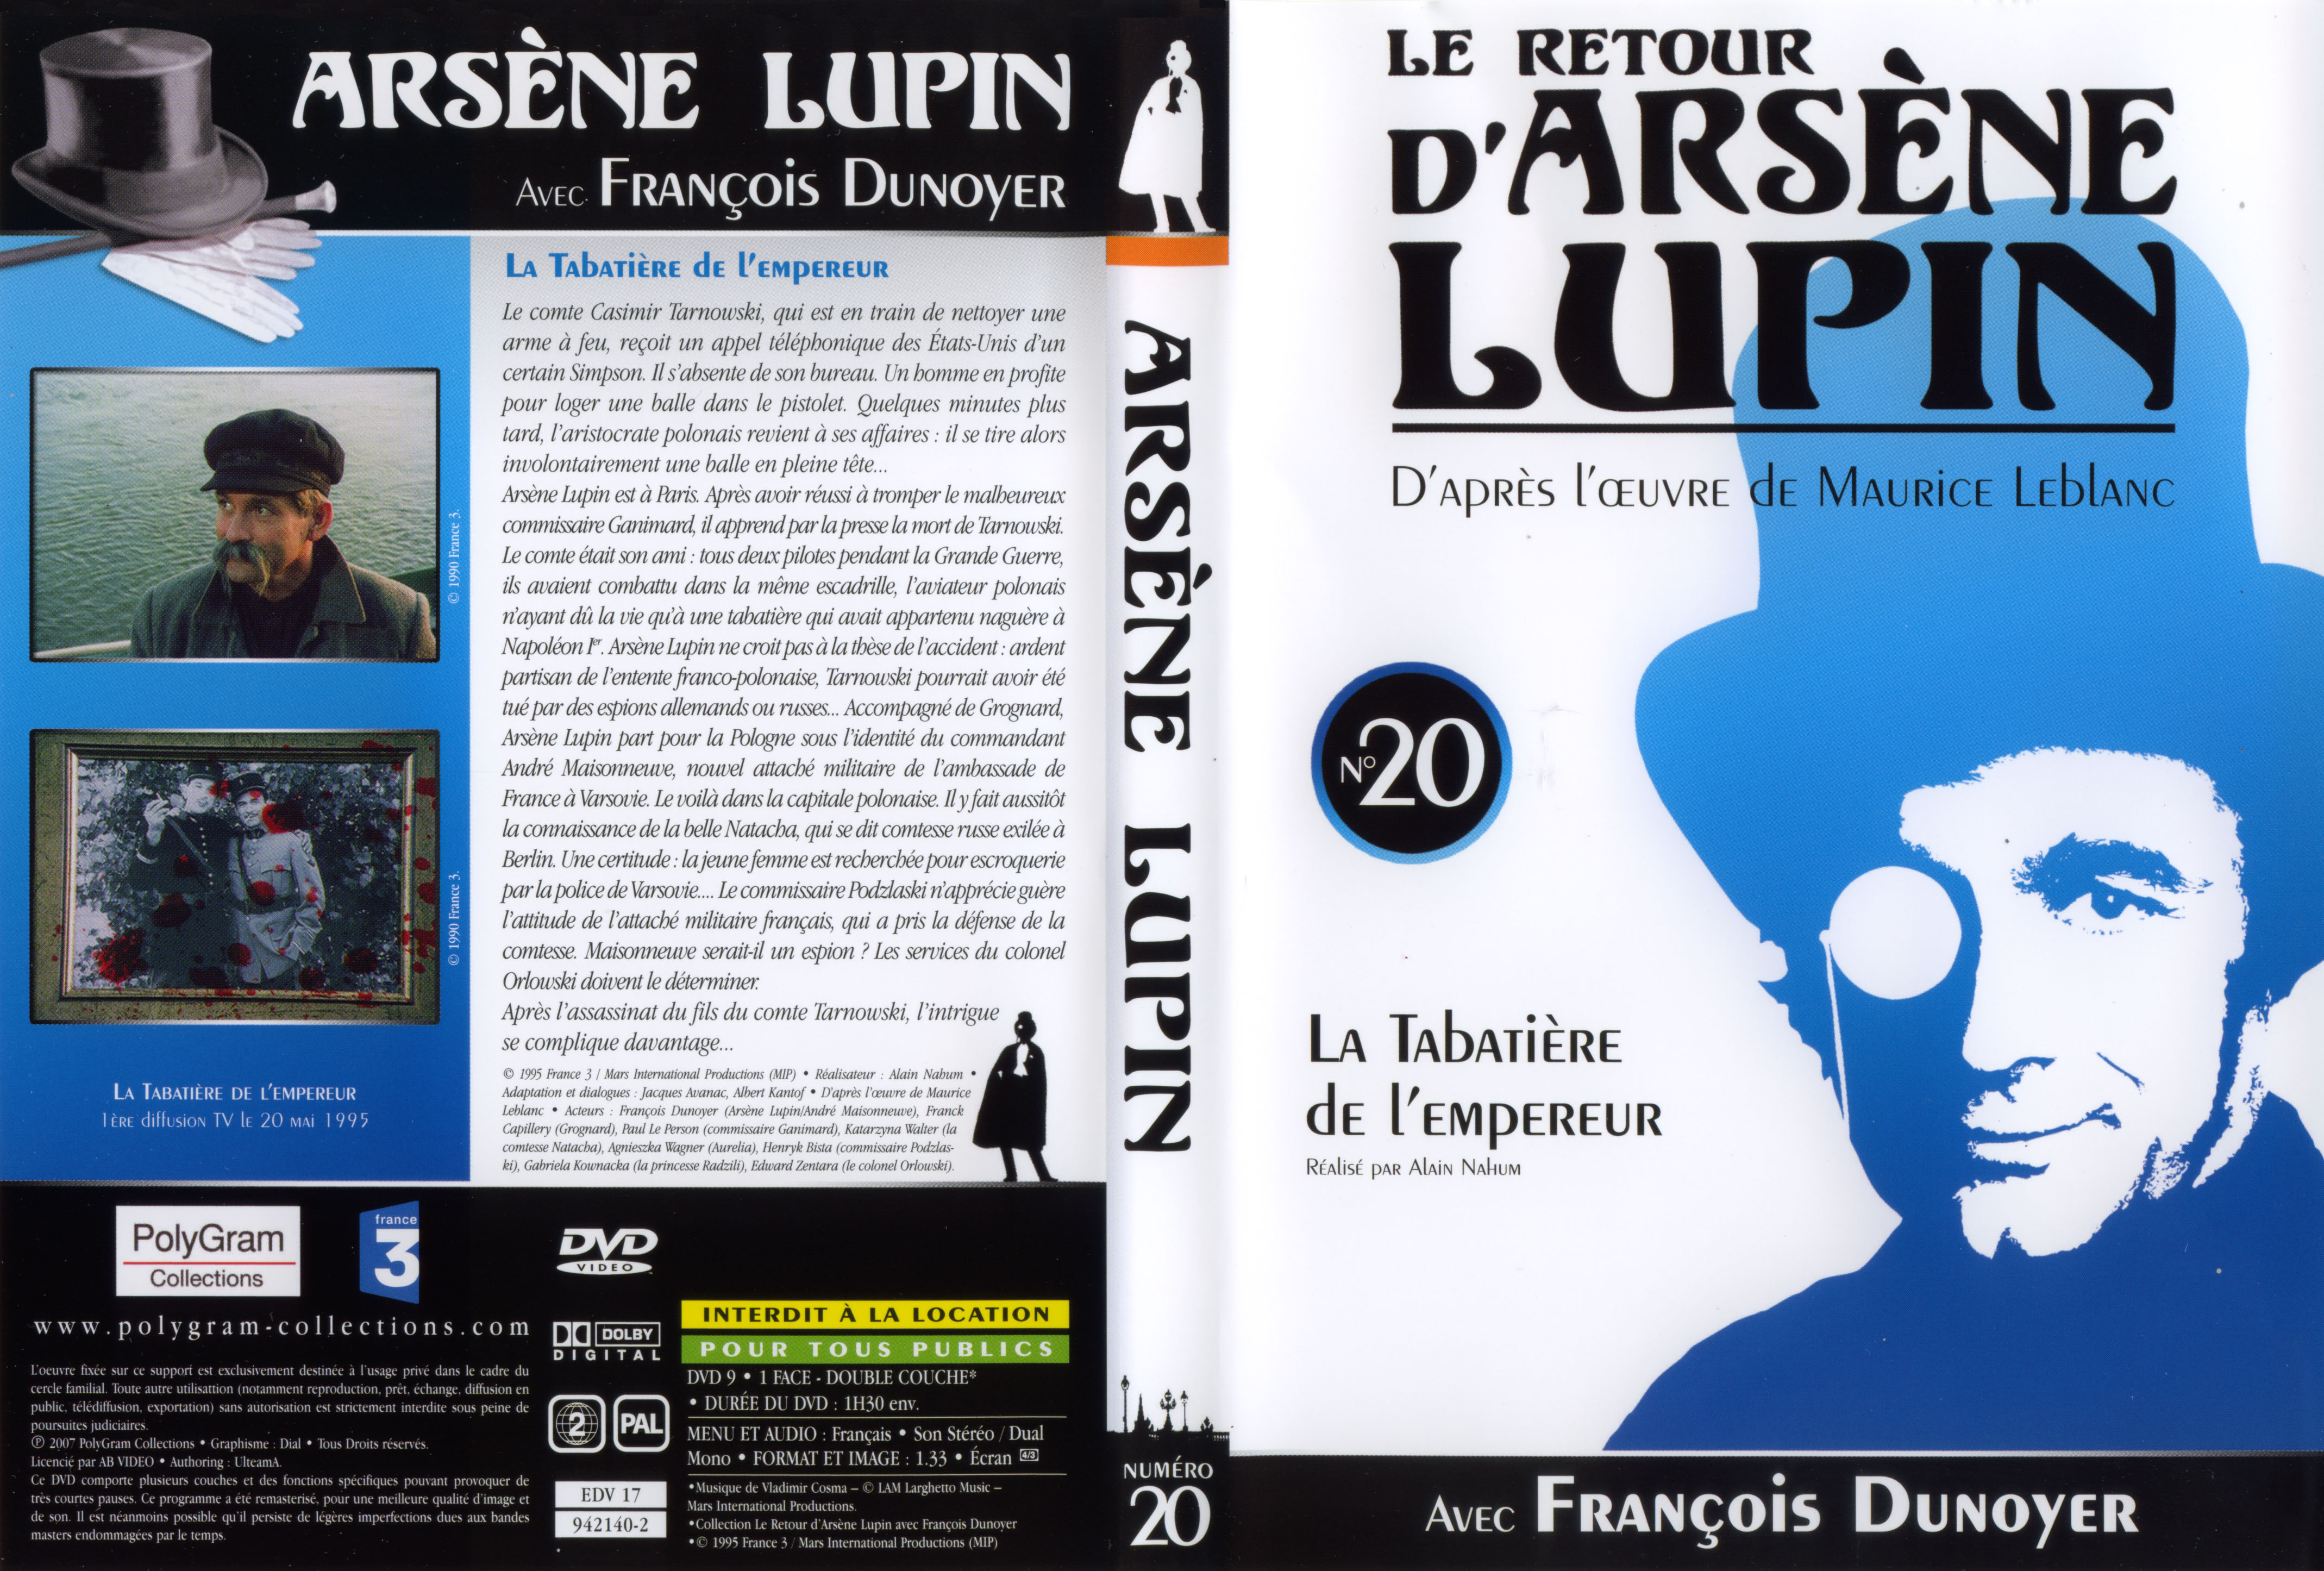 Jaquette DVD Arsene Lupin DVD 20